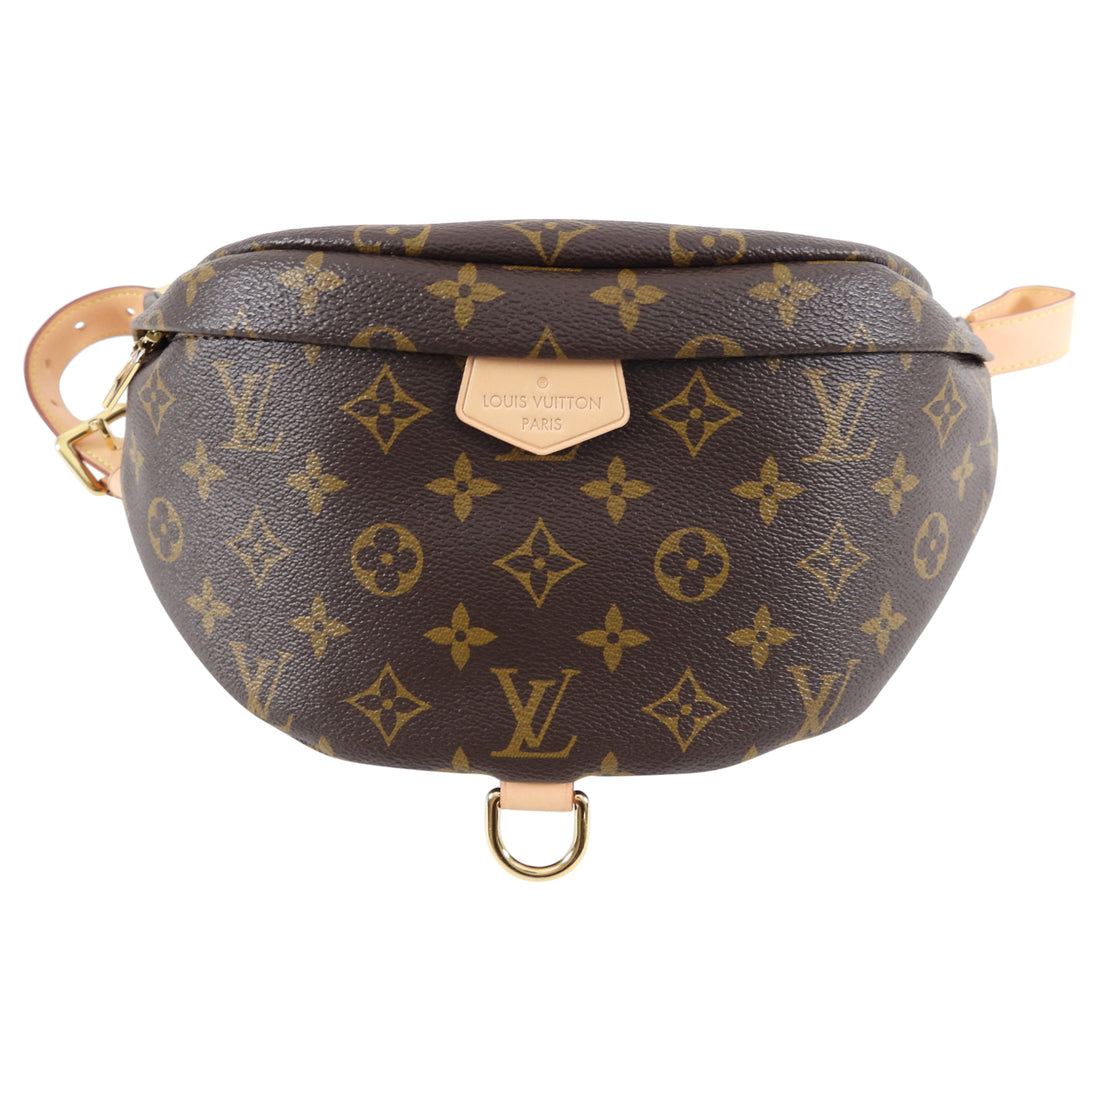 A Paris Louis Vuitton Designers Luxury Waist Bag Cross Body